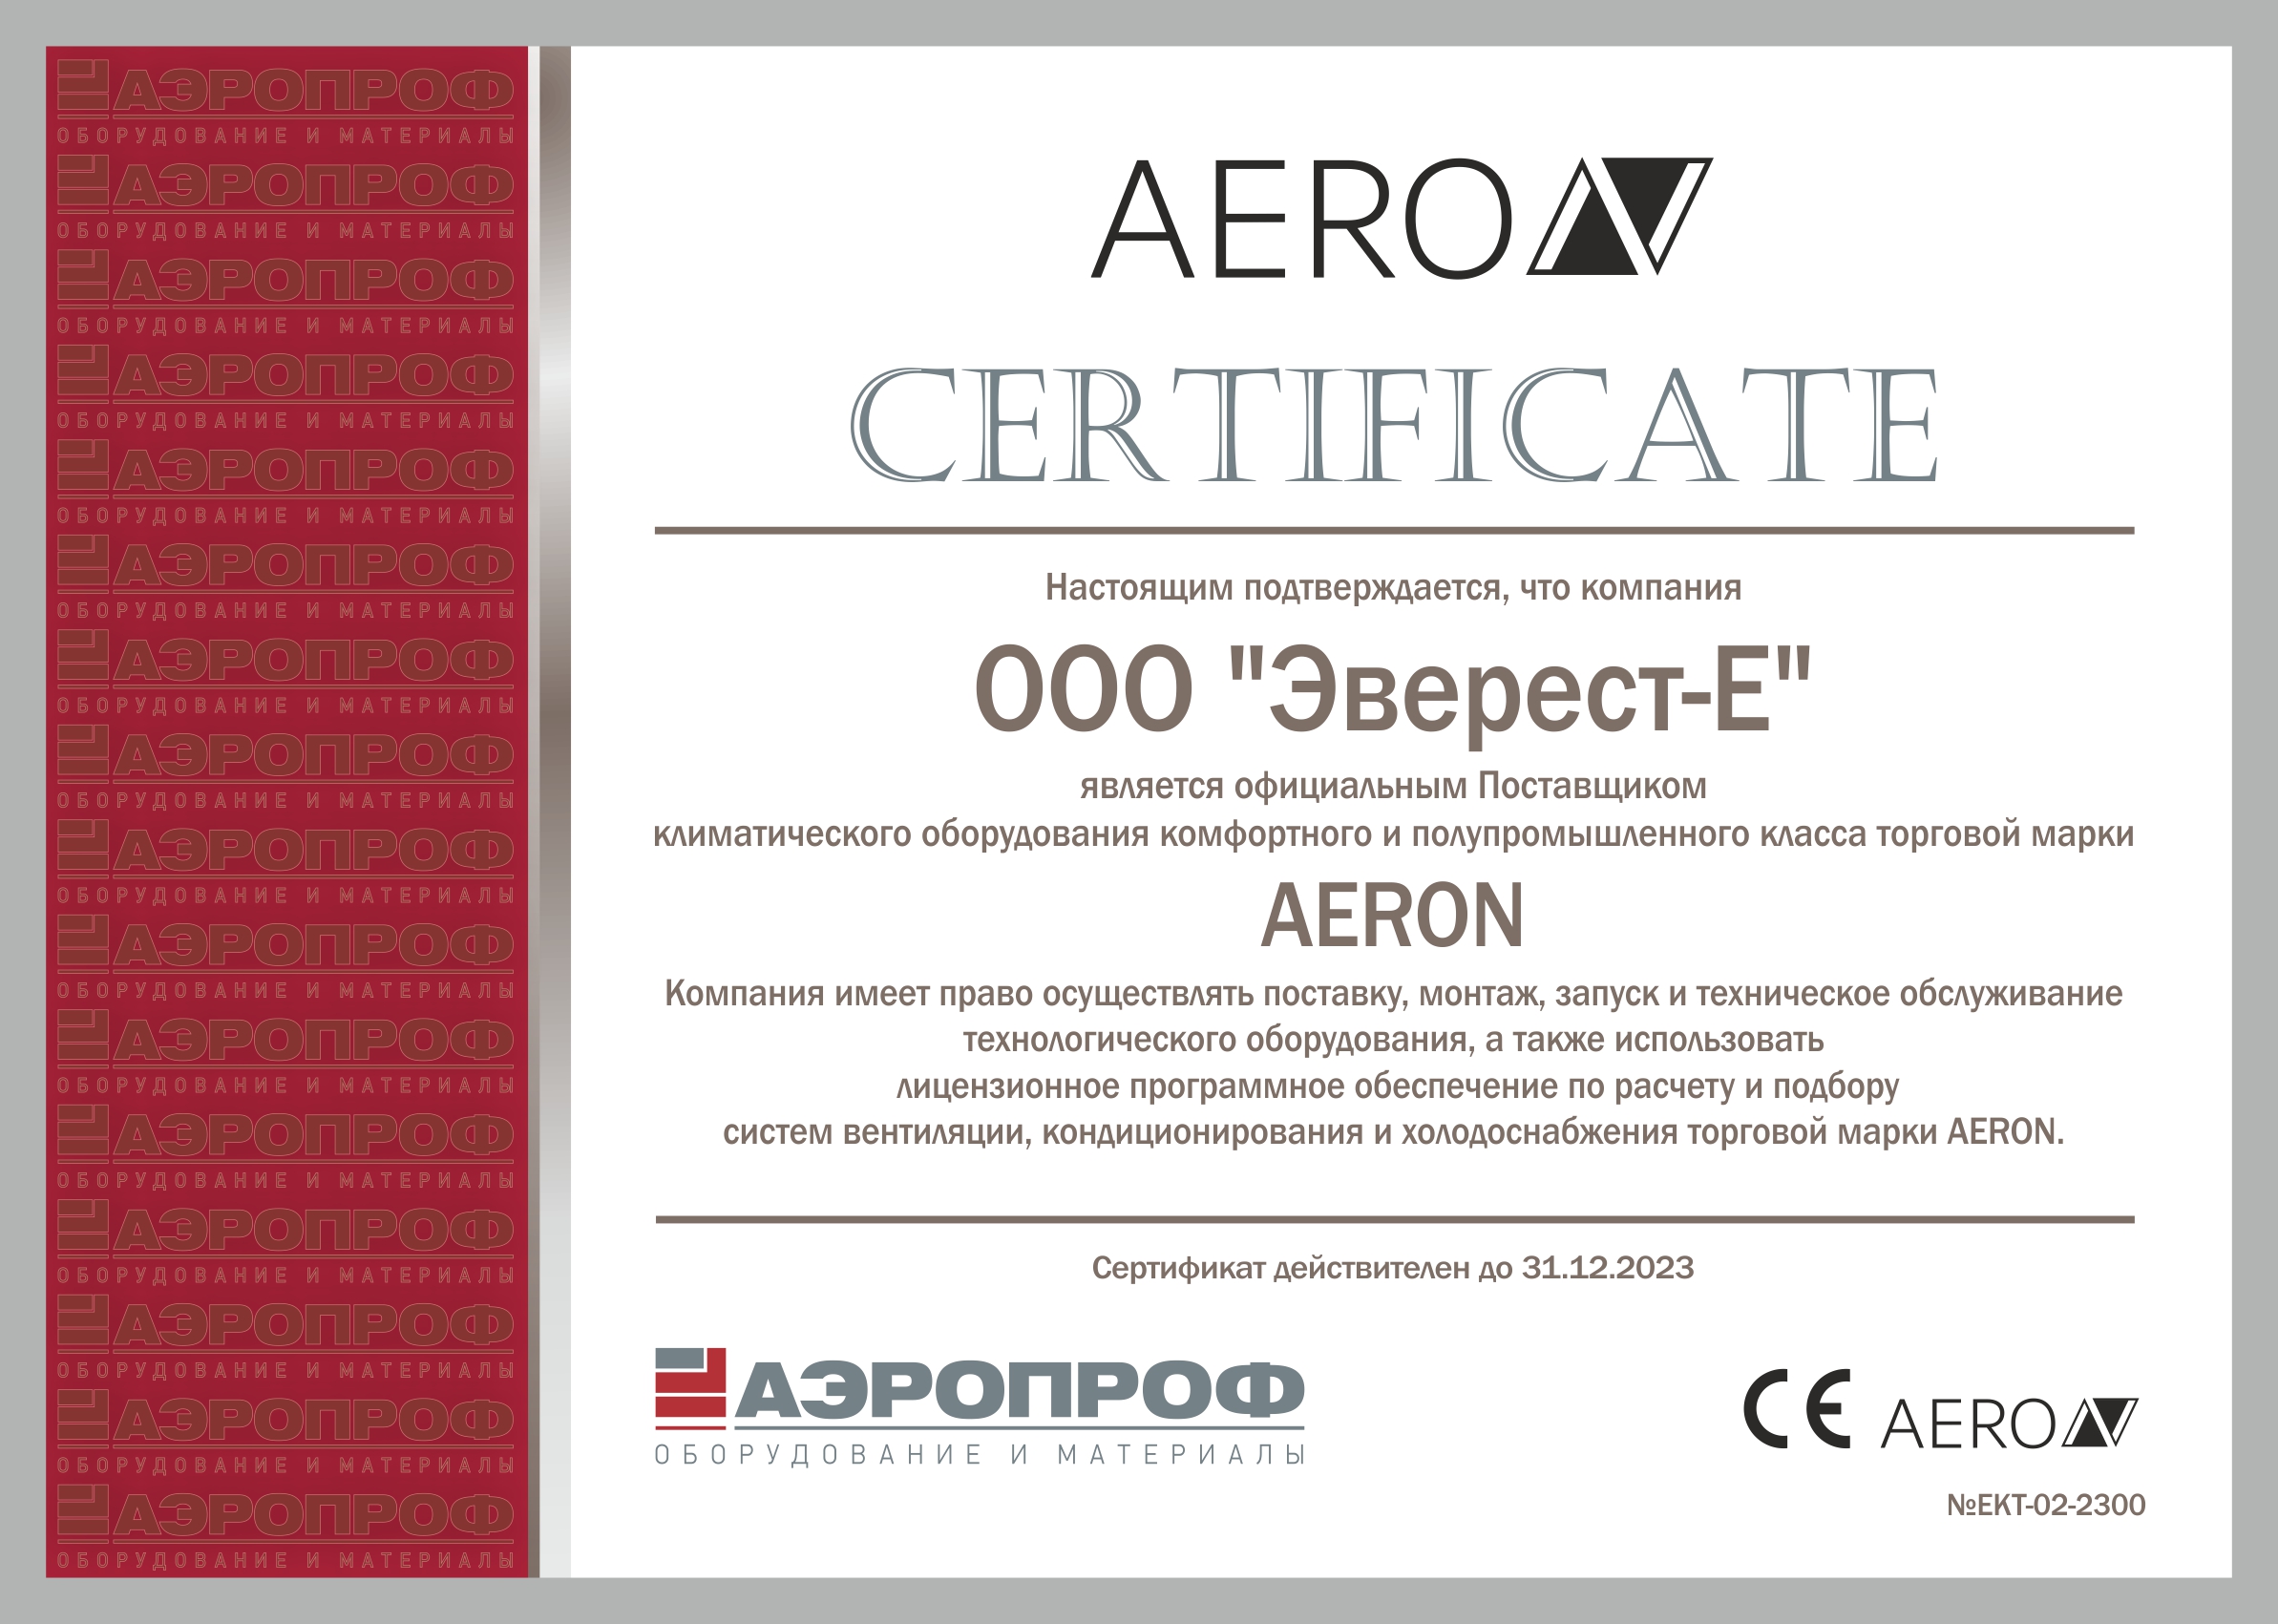 sert23-everest-aeron Kondicioner Aero ARS-II-18IHN21D6-01/ARS-II-18OHN21D6-01 kypit v Ekaterinbyrge v internet-magazine KlimatMarket96.ry Сертификат официального дилера